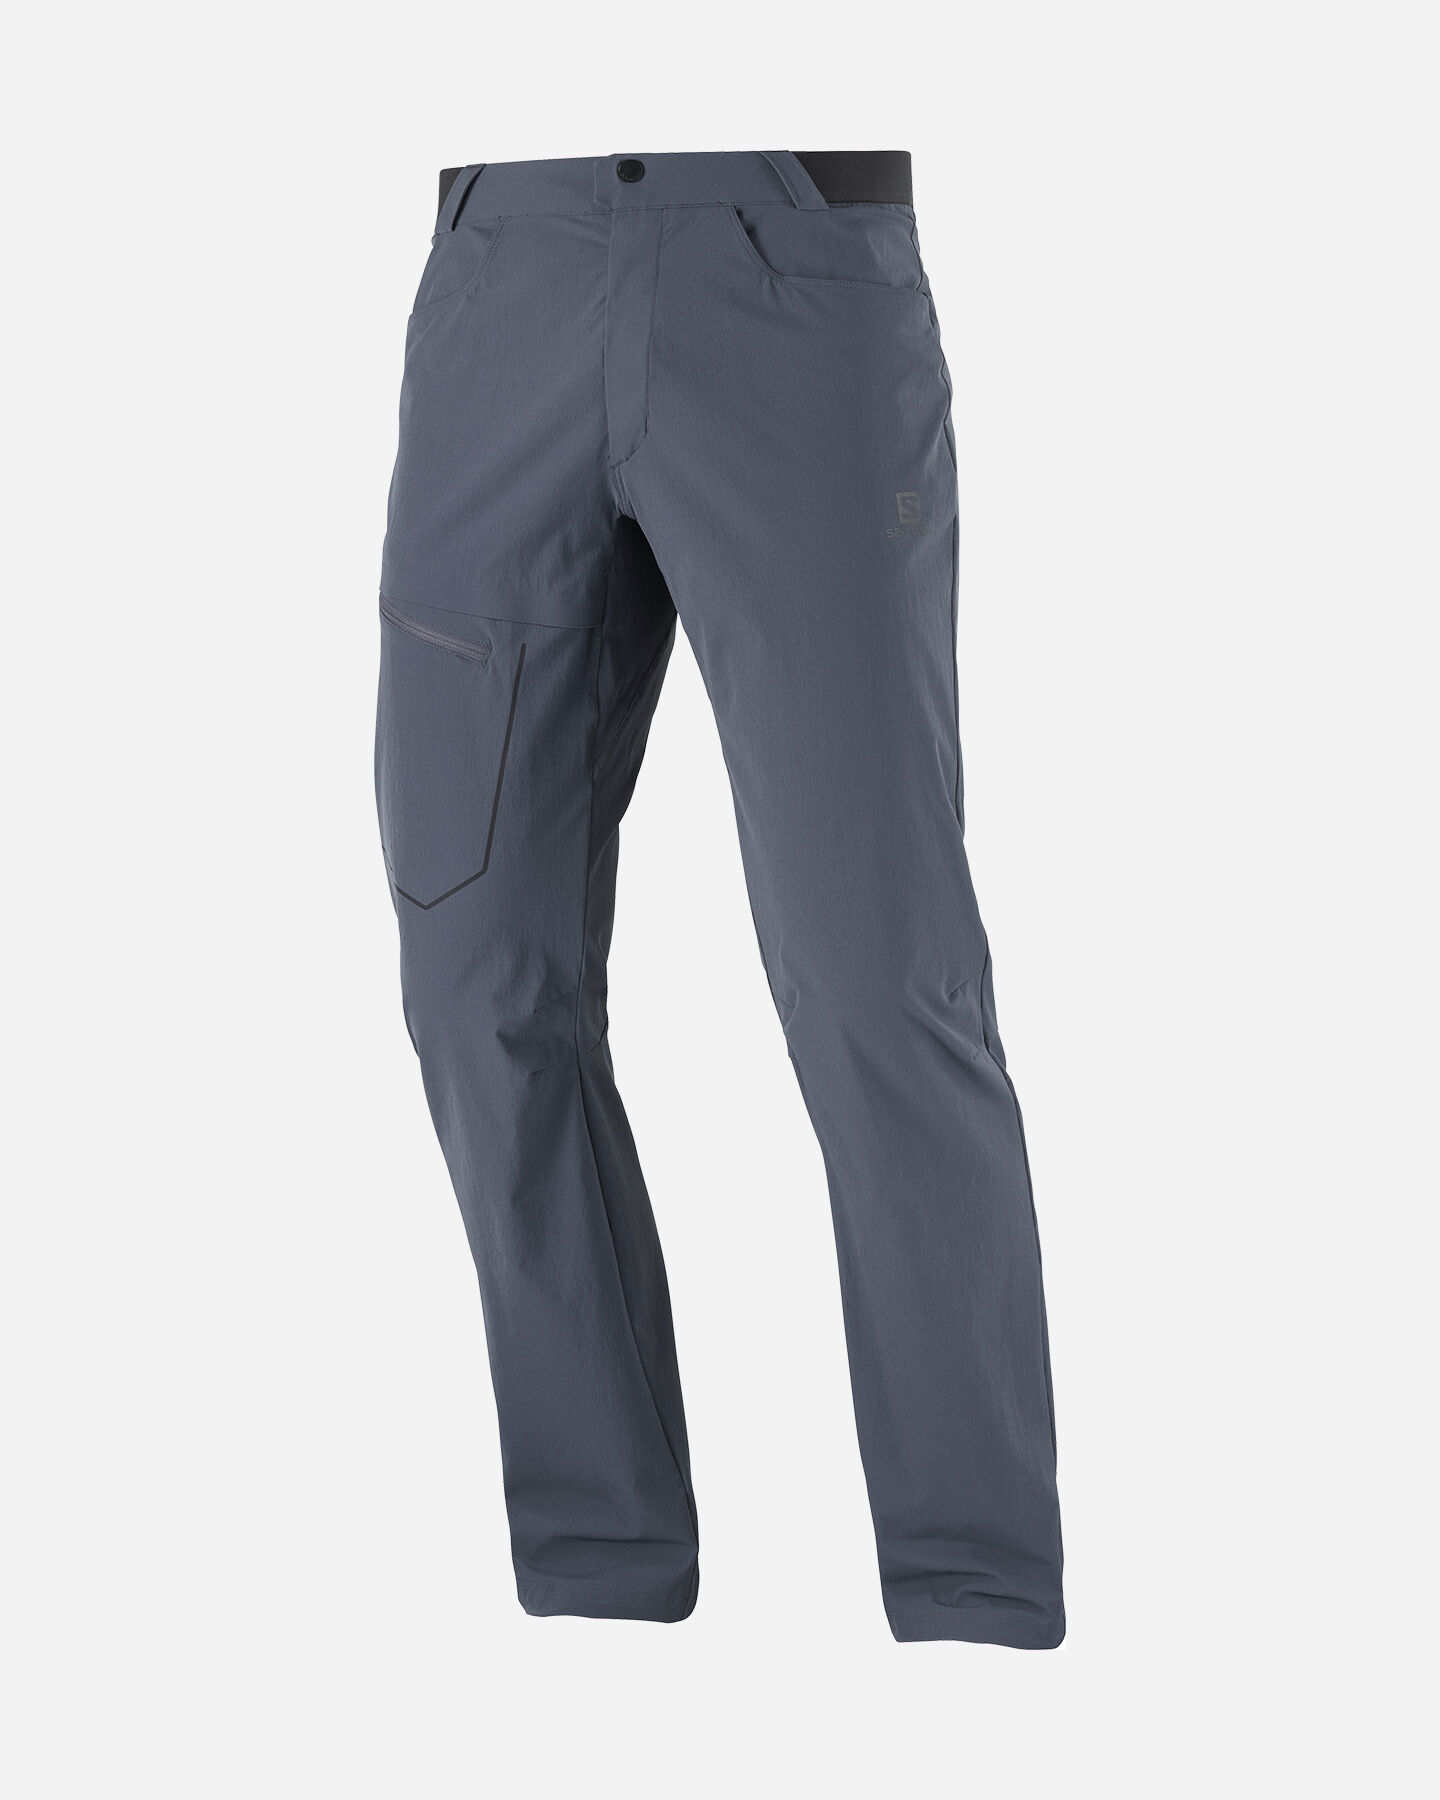  Pantalone outdoor SALOMON WAYFARER M S5426516|UNI|52/R scatto 0